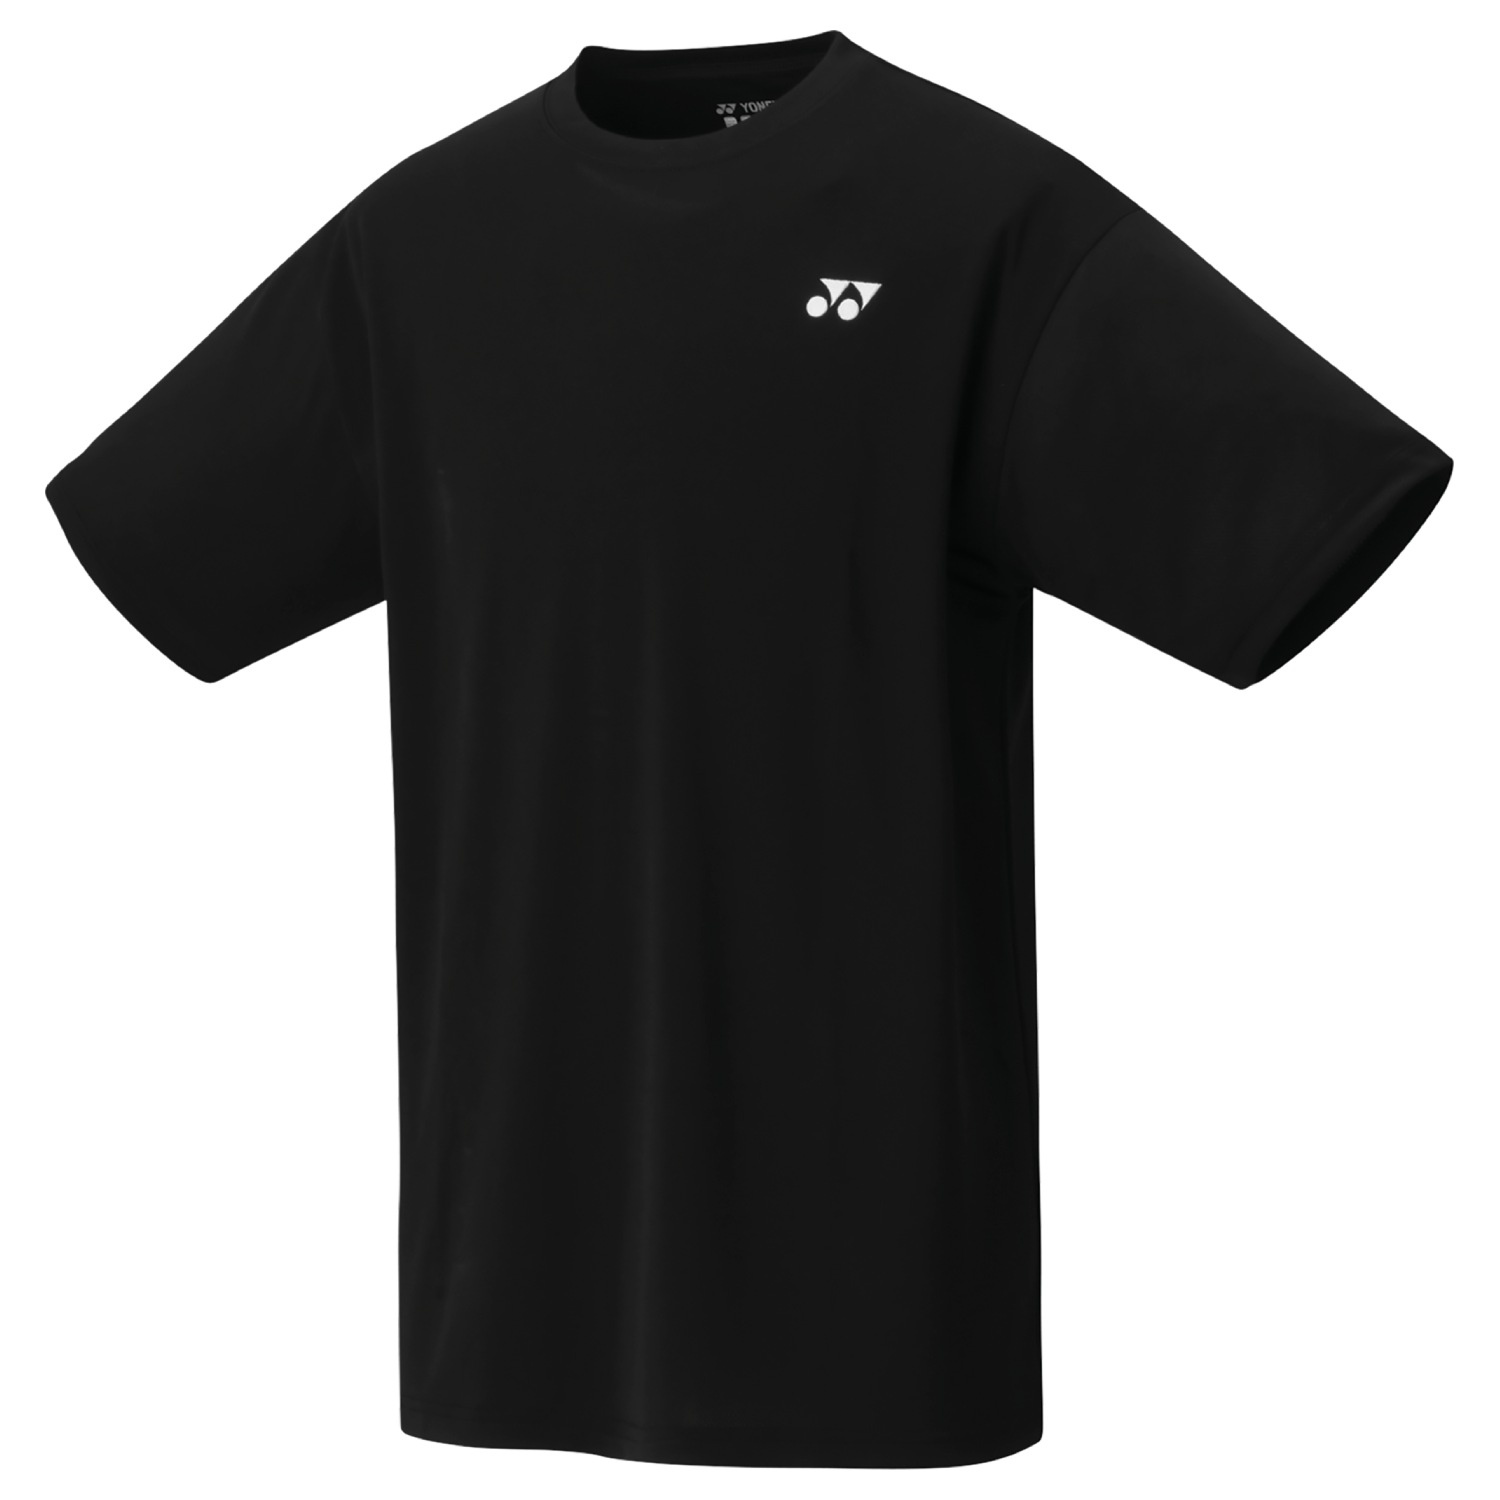 Yonex T-Shirt Training Black